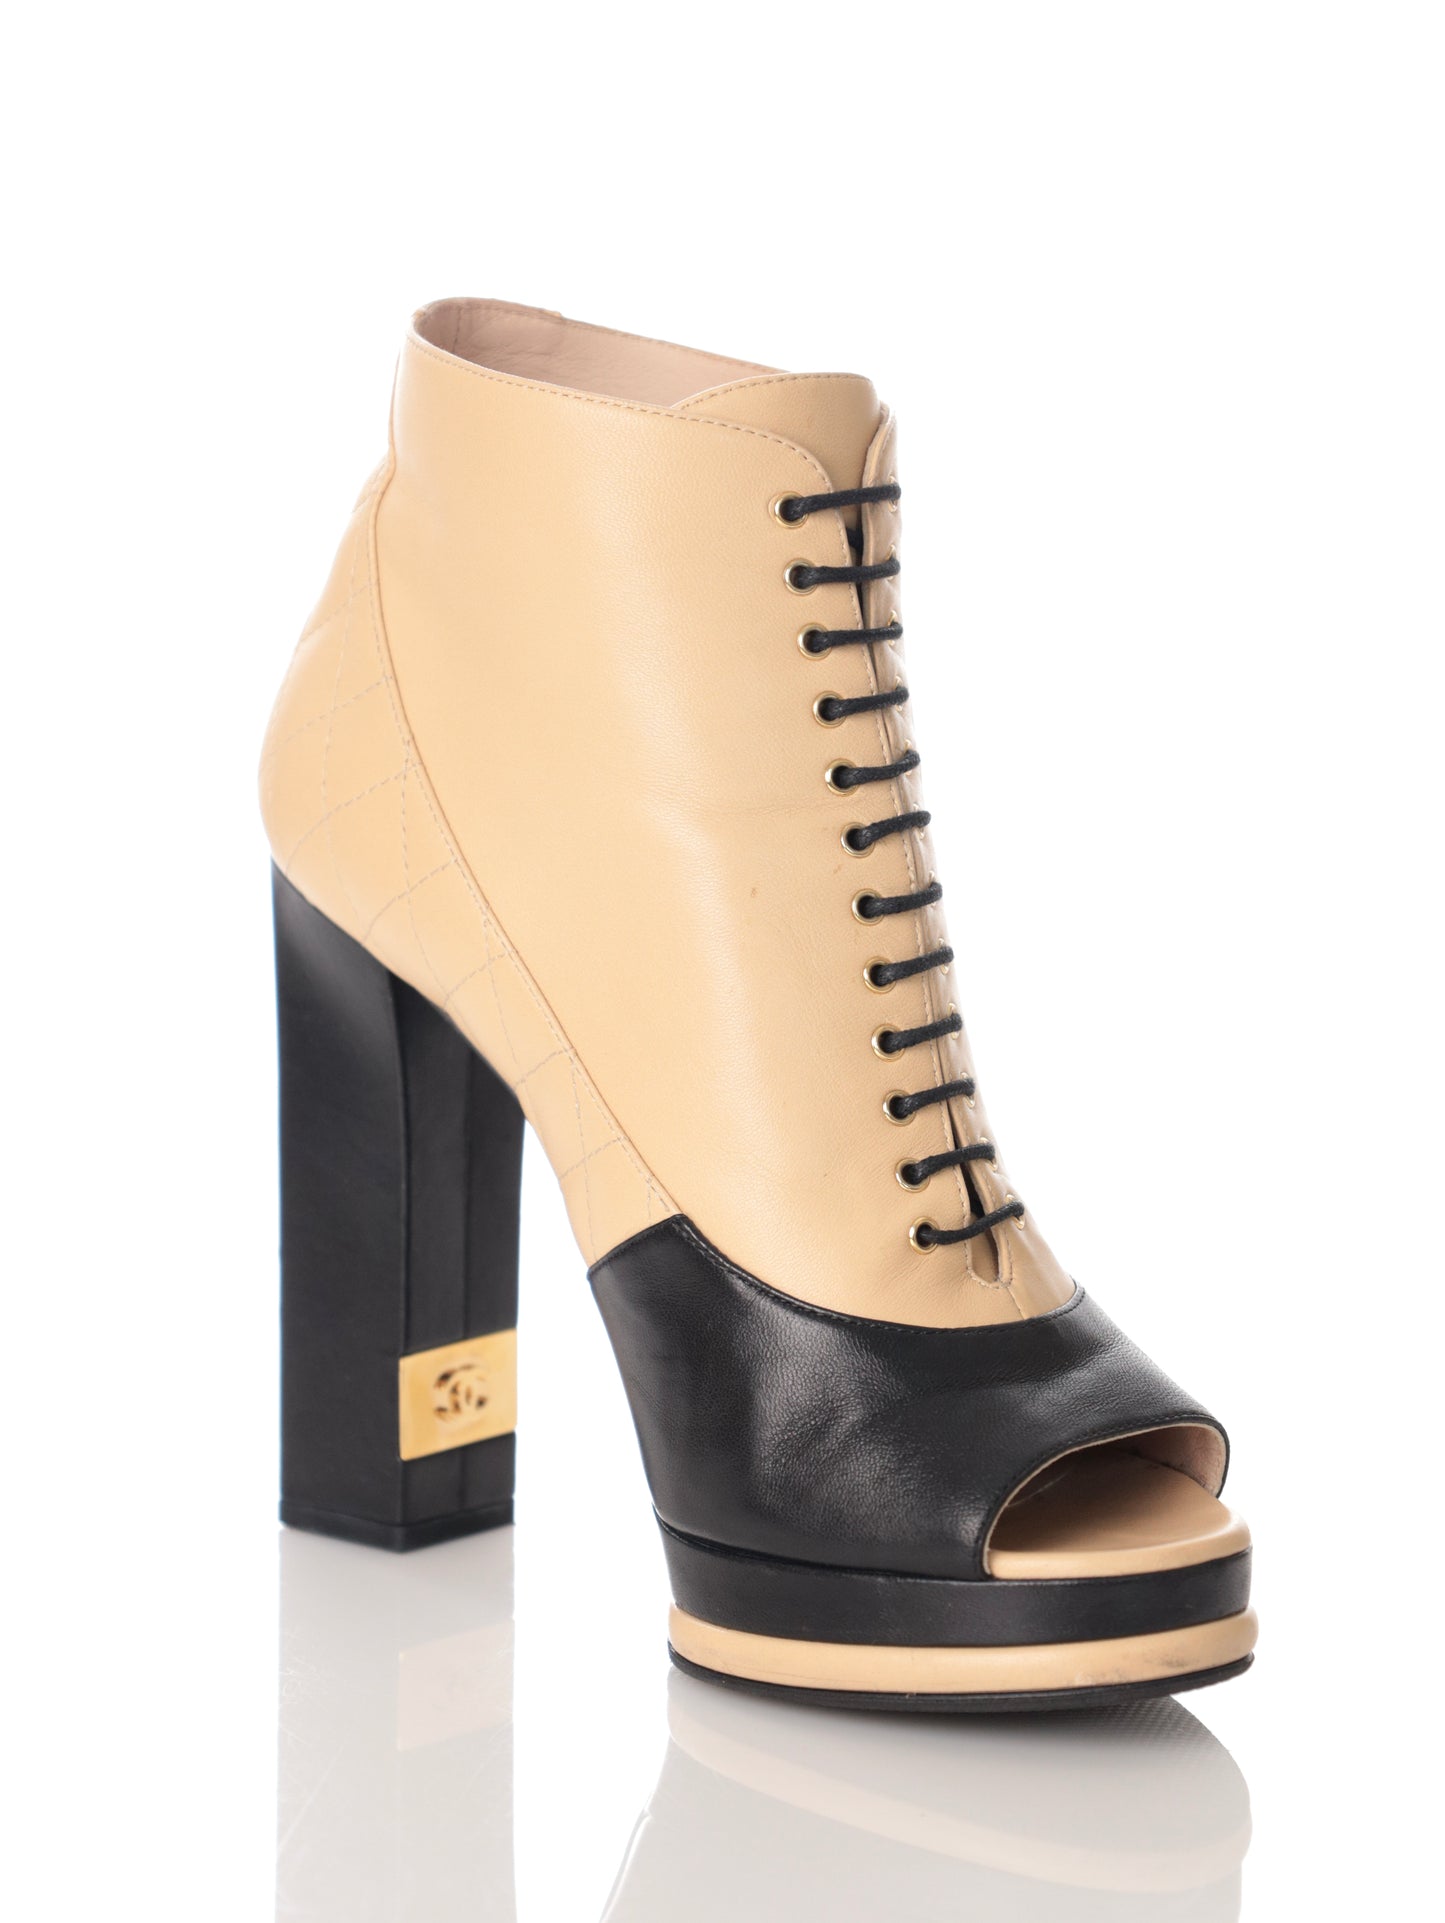 CHANEL Bottines Leder Boots Stiefeletten Gr. 40 G29606 High Heels